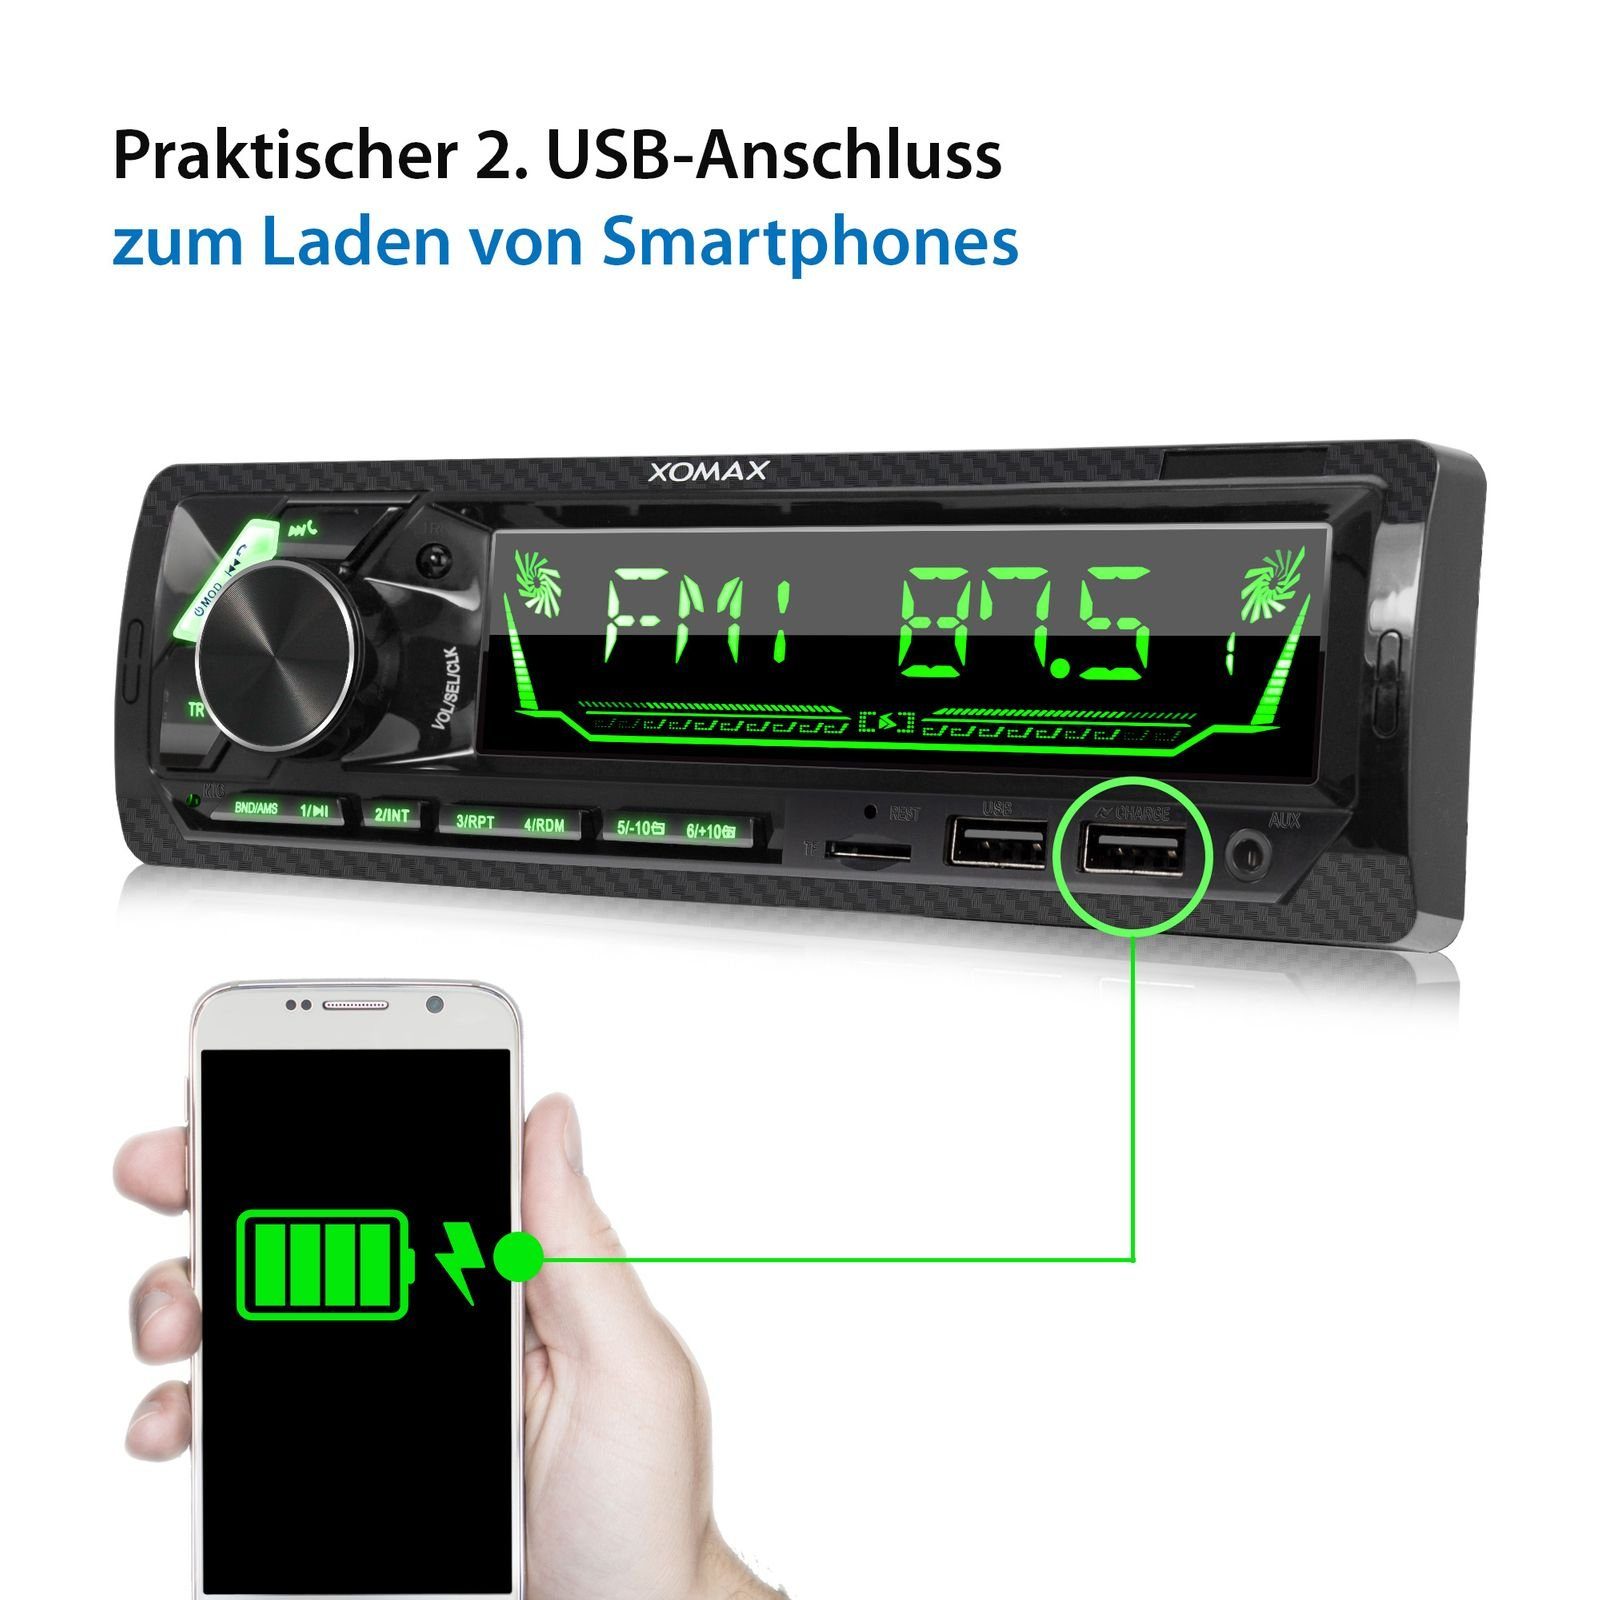 XOMAX XM-RD285 Autoradio mit DAB+ Bluetooth, DIN SD, USB, 2x 1 plus, AUX, Autoradio